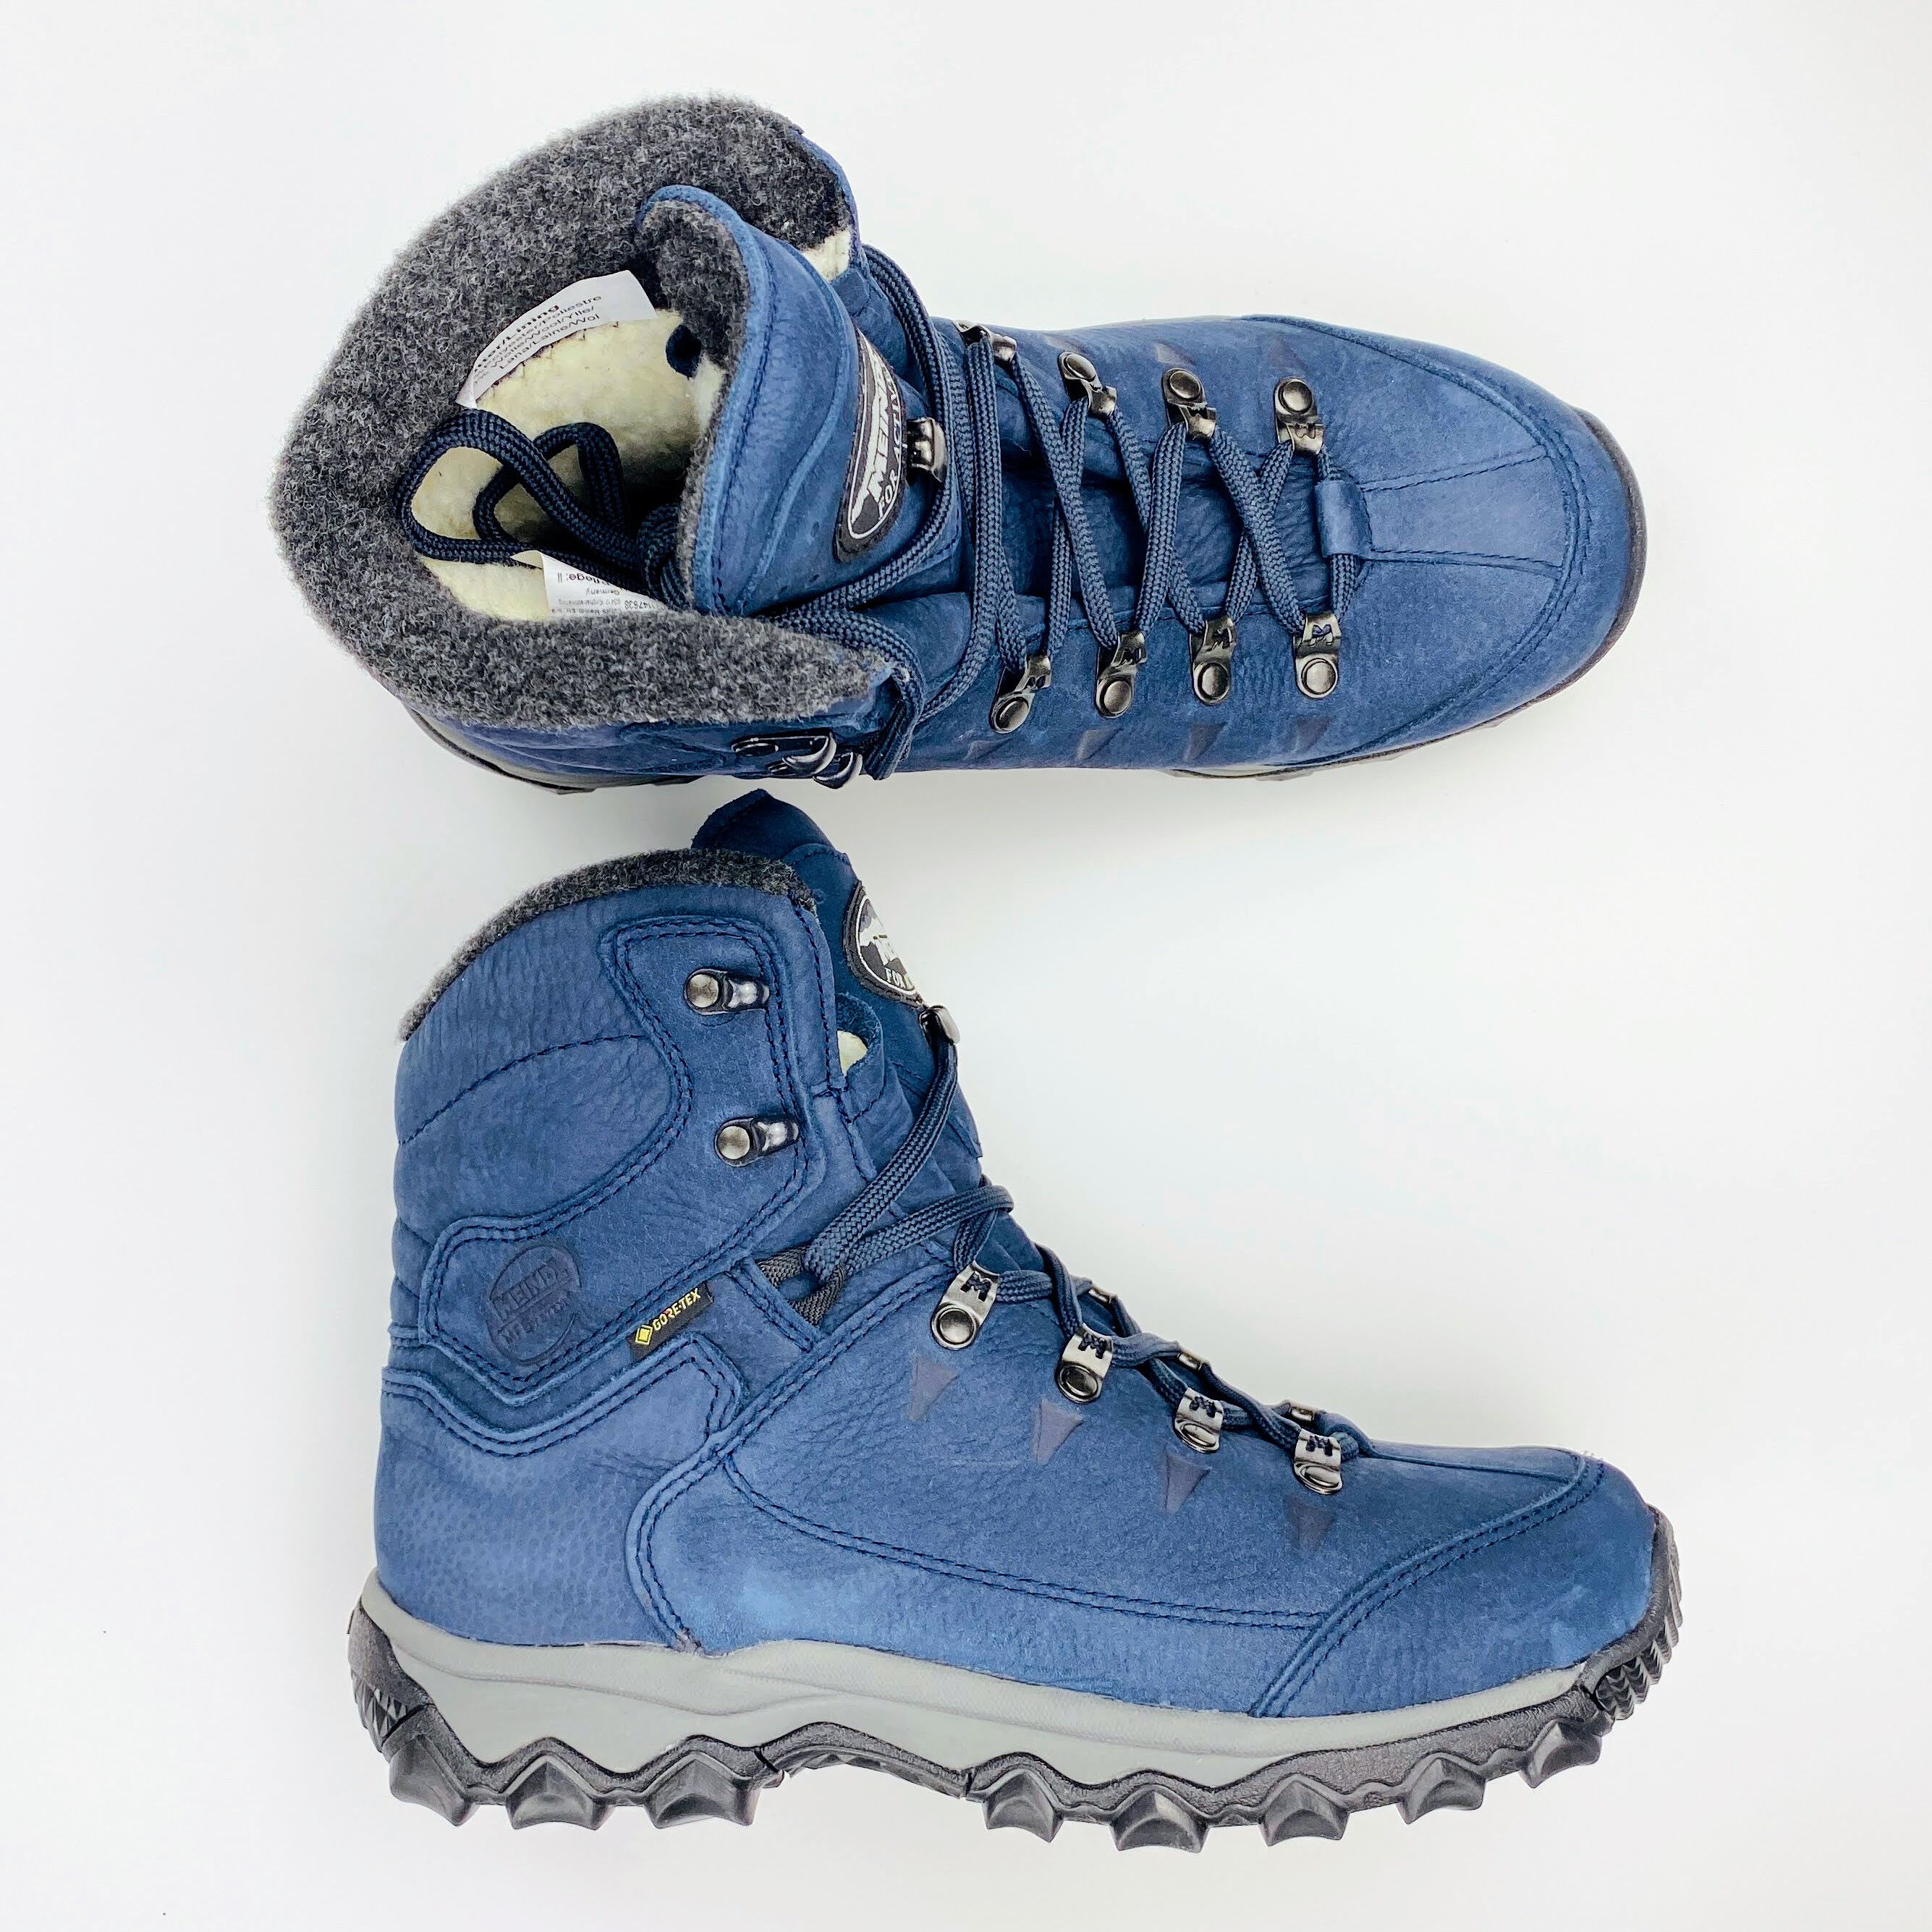 Meindl Ohio Lady Winter GTX - Seconde main Chaussures femme - Bleu pétrole - 40 | Hardloop